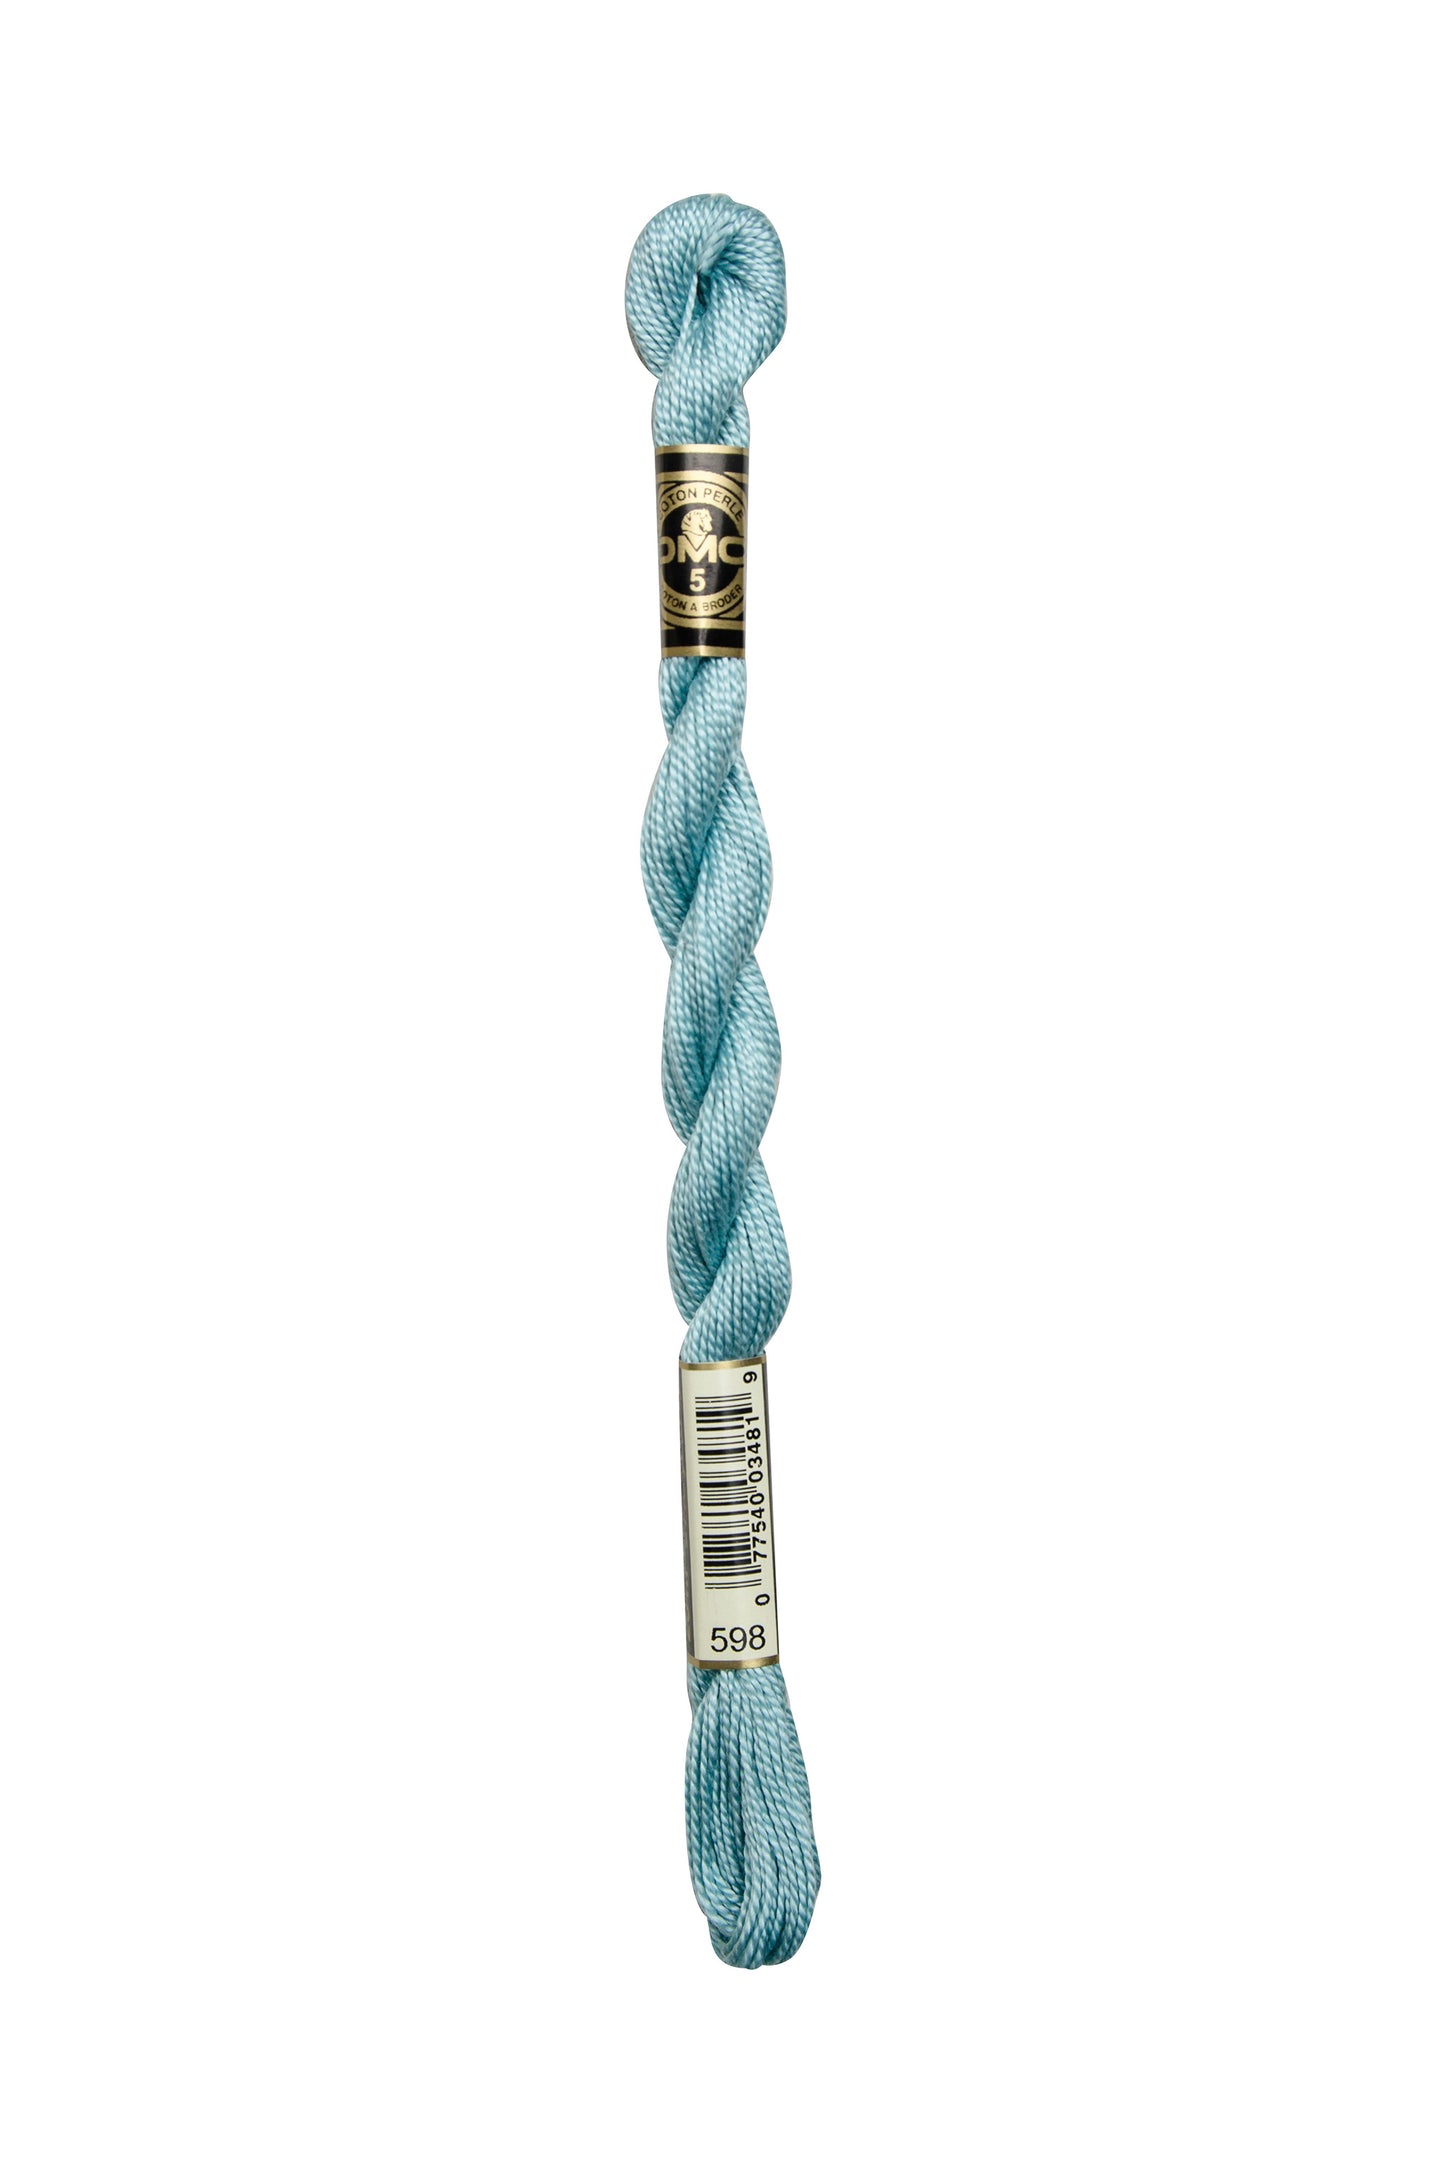 598 Light Turquoise – DMC #5 Perle Cotton Skein